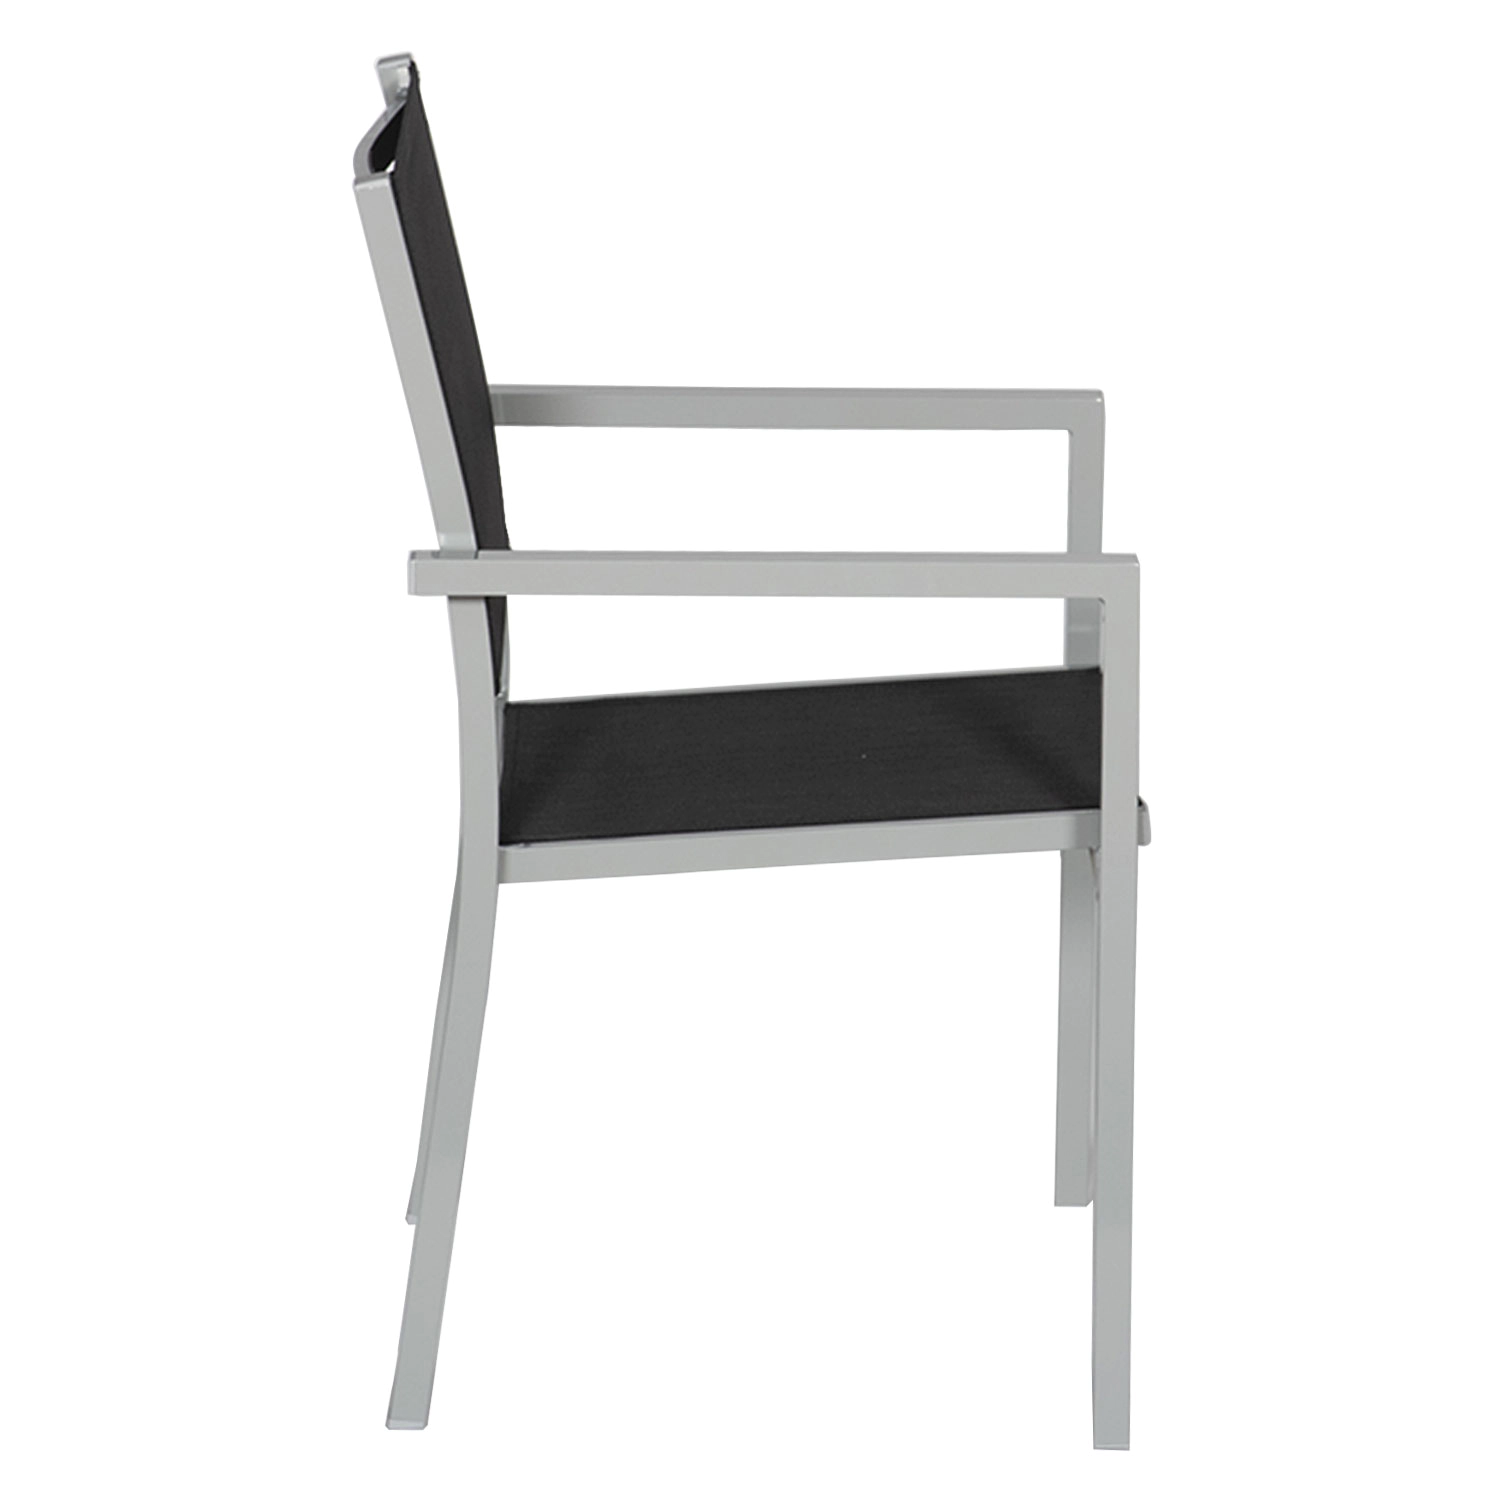 Conjunto de 10 cadeiras de alumínio cinzento - textilene preto